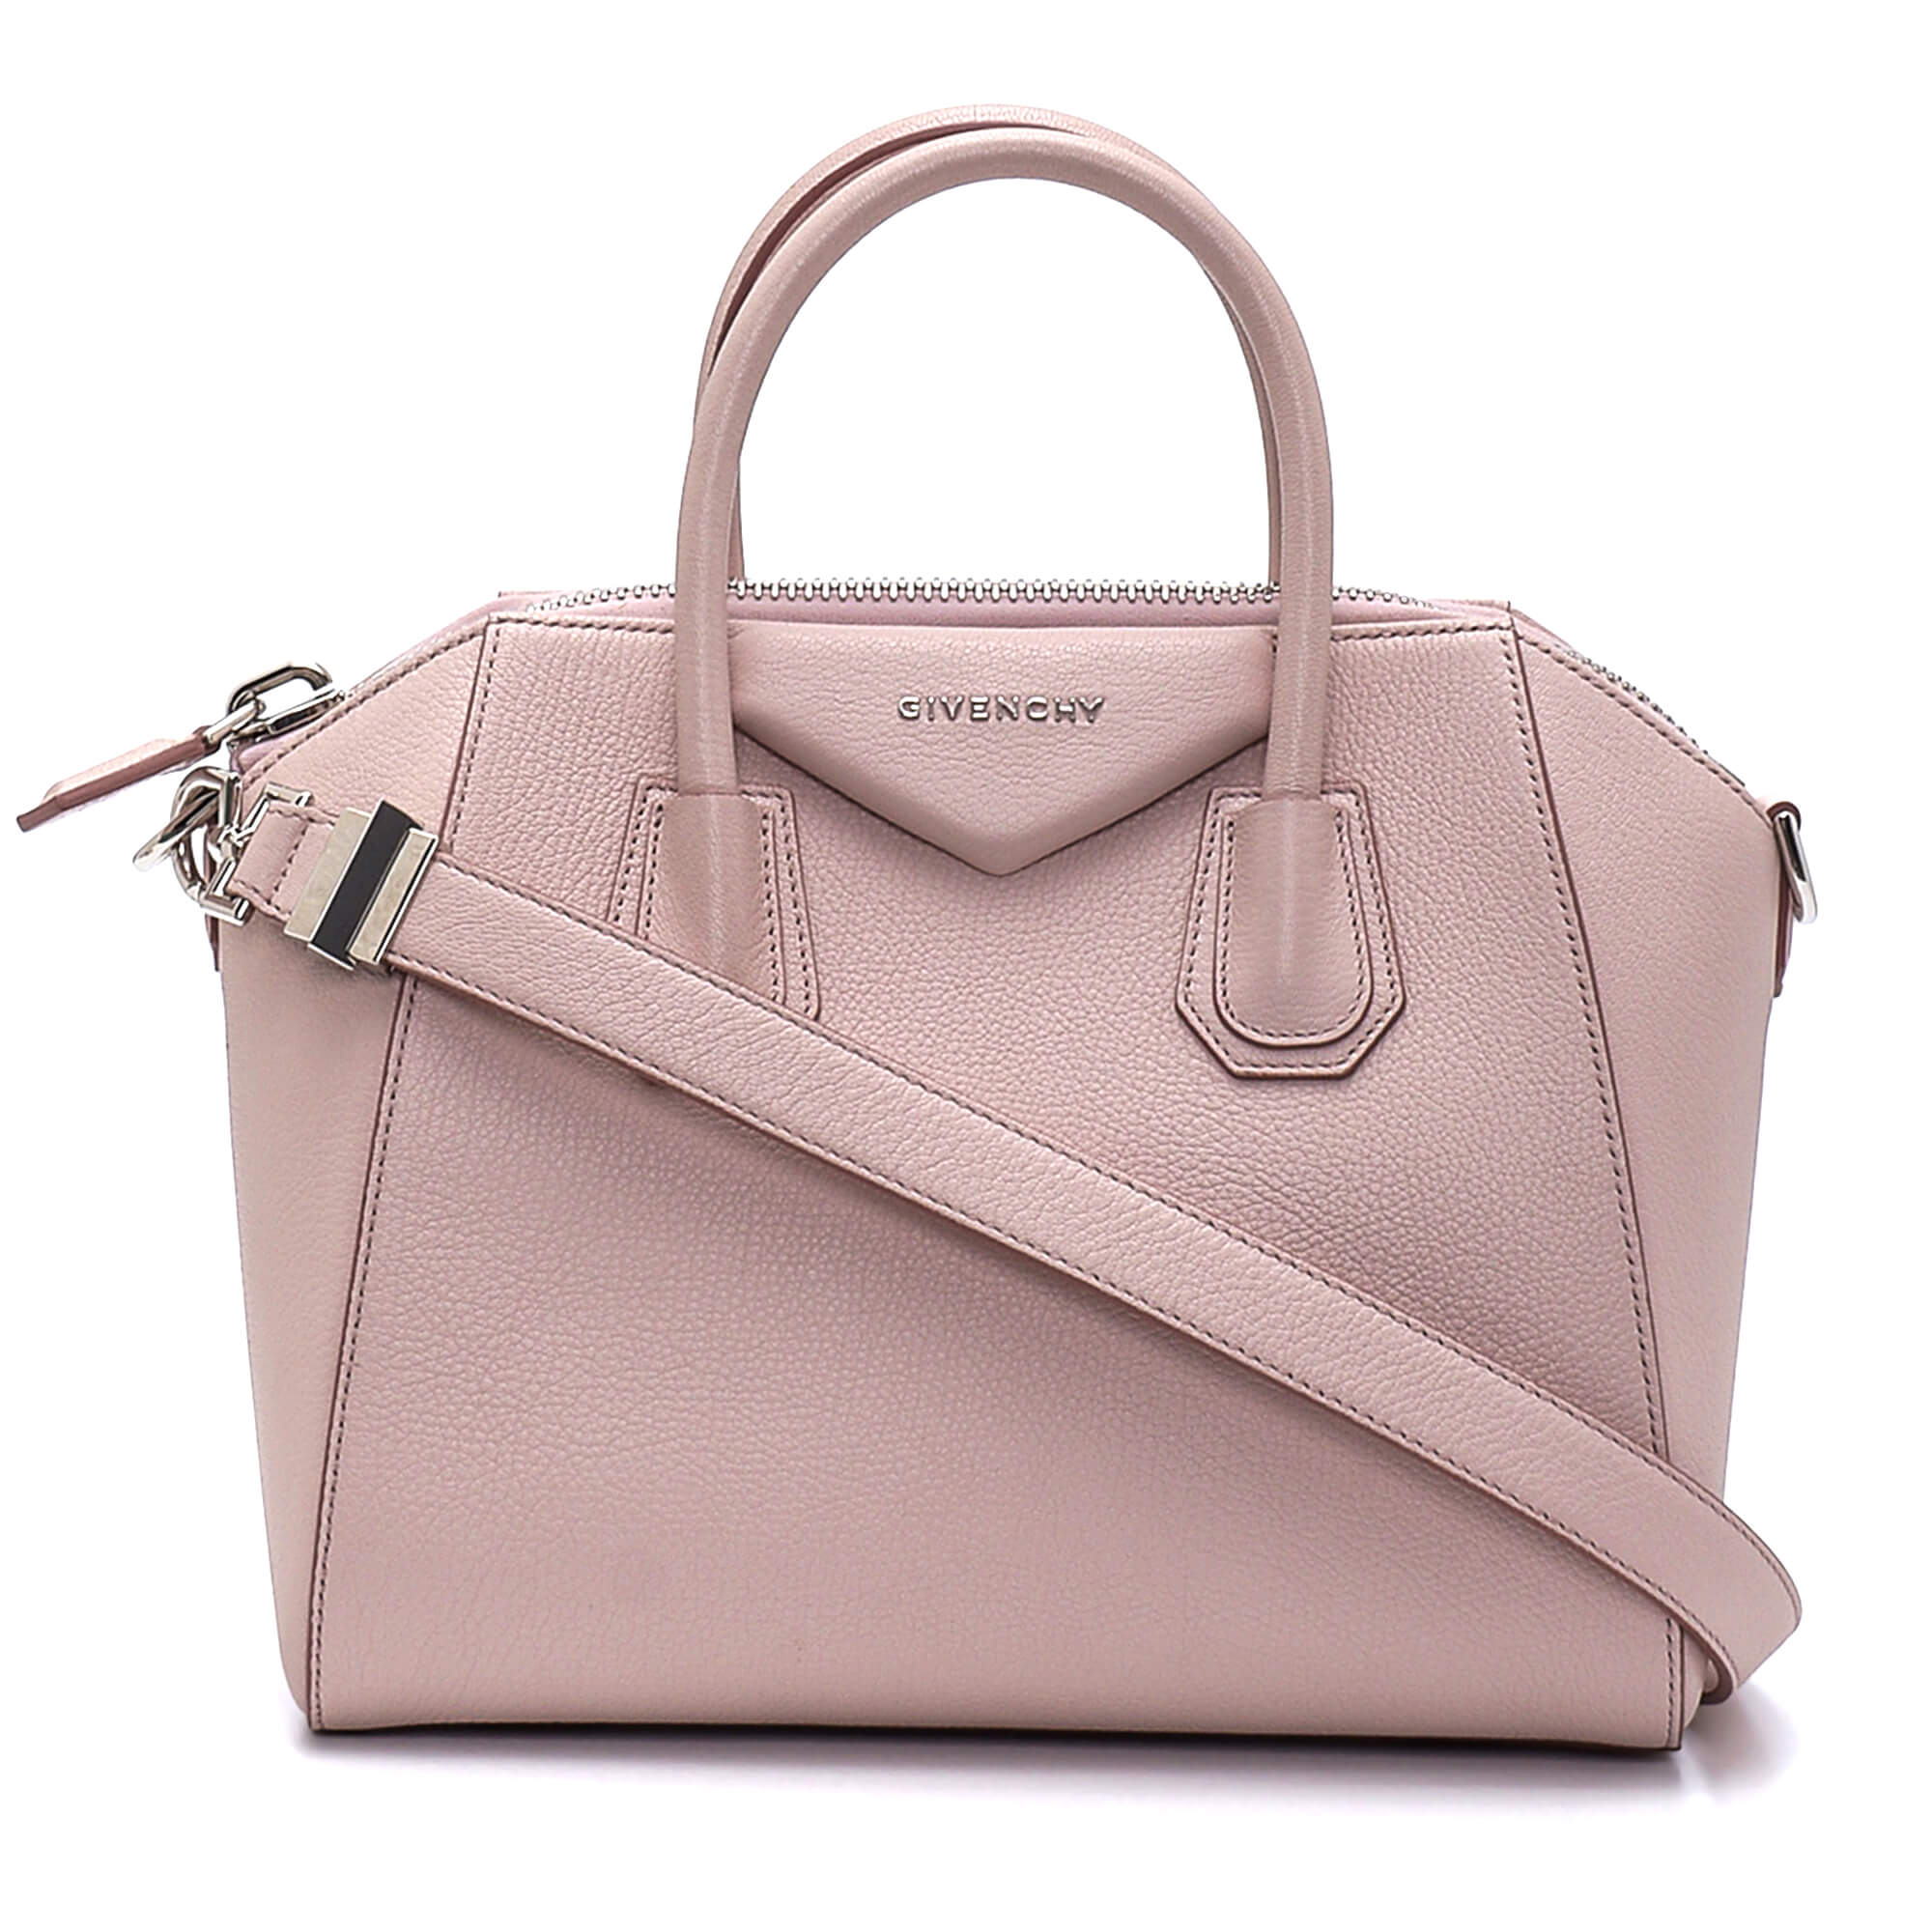 Givenchy - Powder Pink Leather Antigona Small Bag